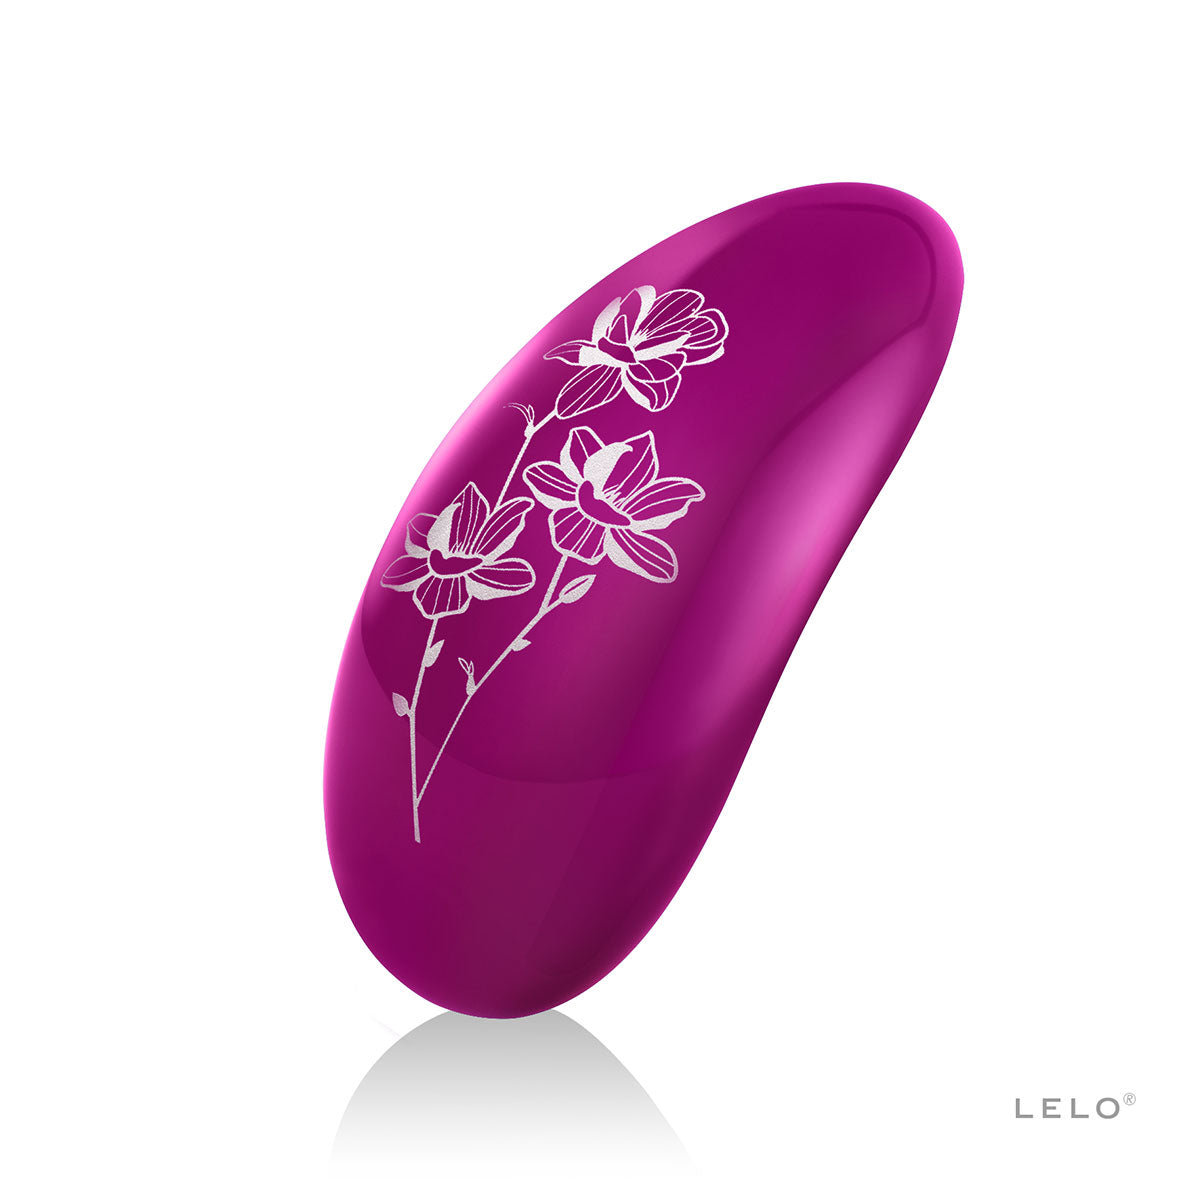 LELO Intimacy Devices LELO Nea 2 - Deep Rose